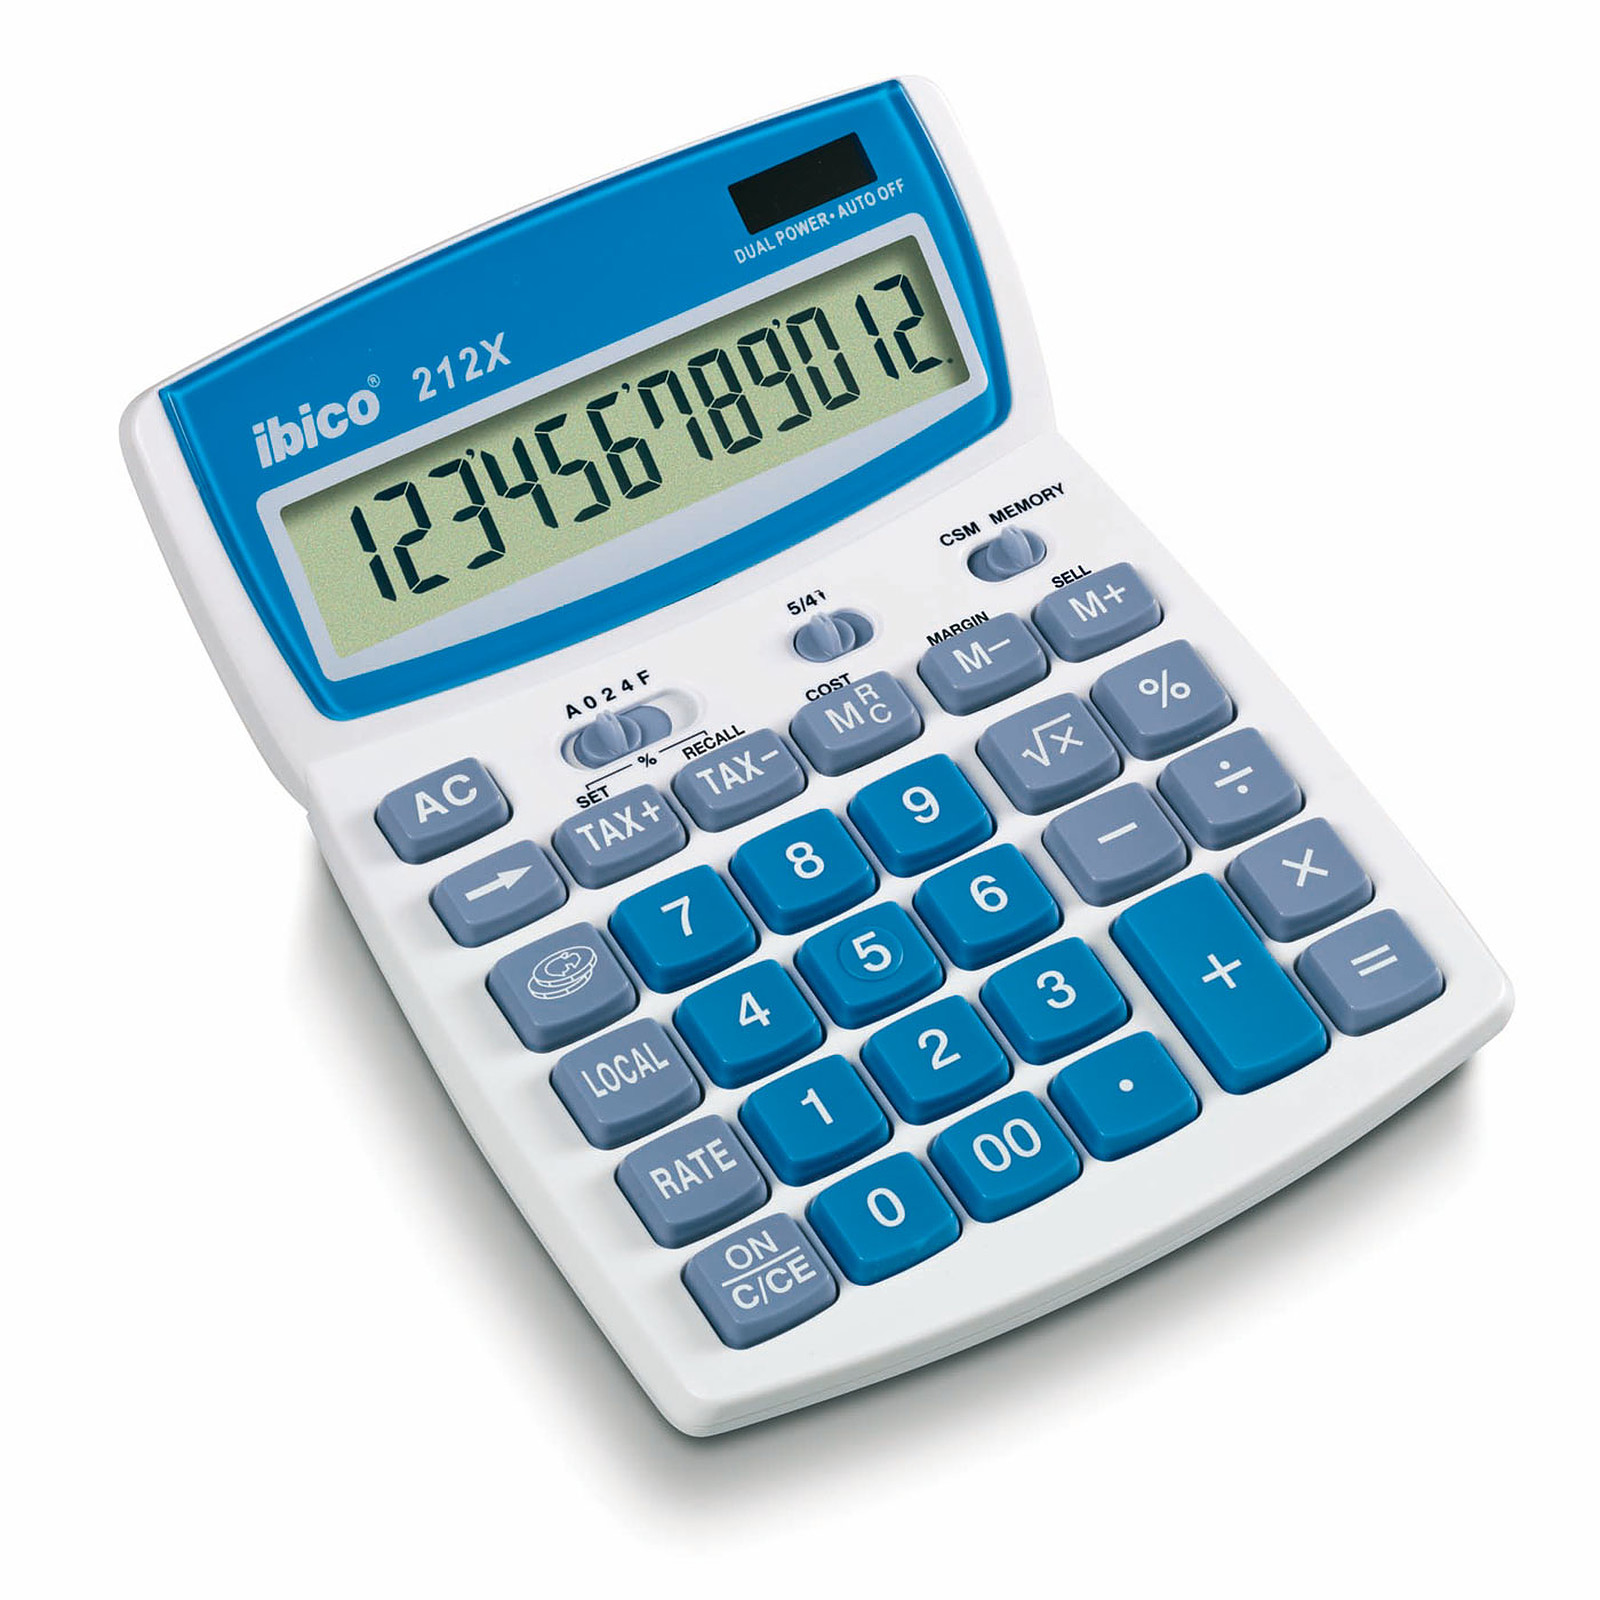 ibico 212X - Calculatrice ibico